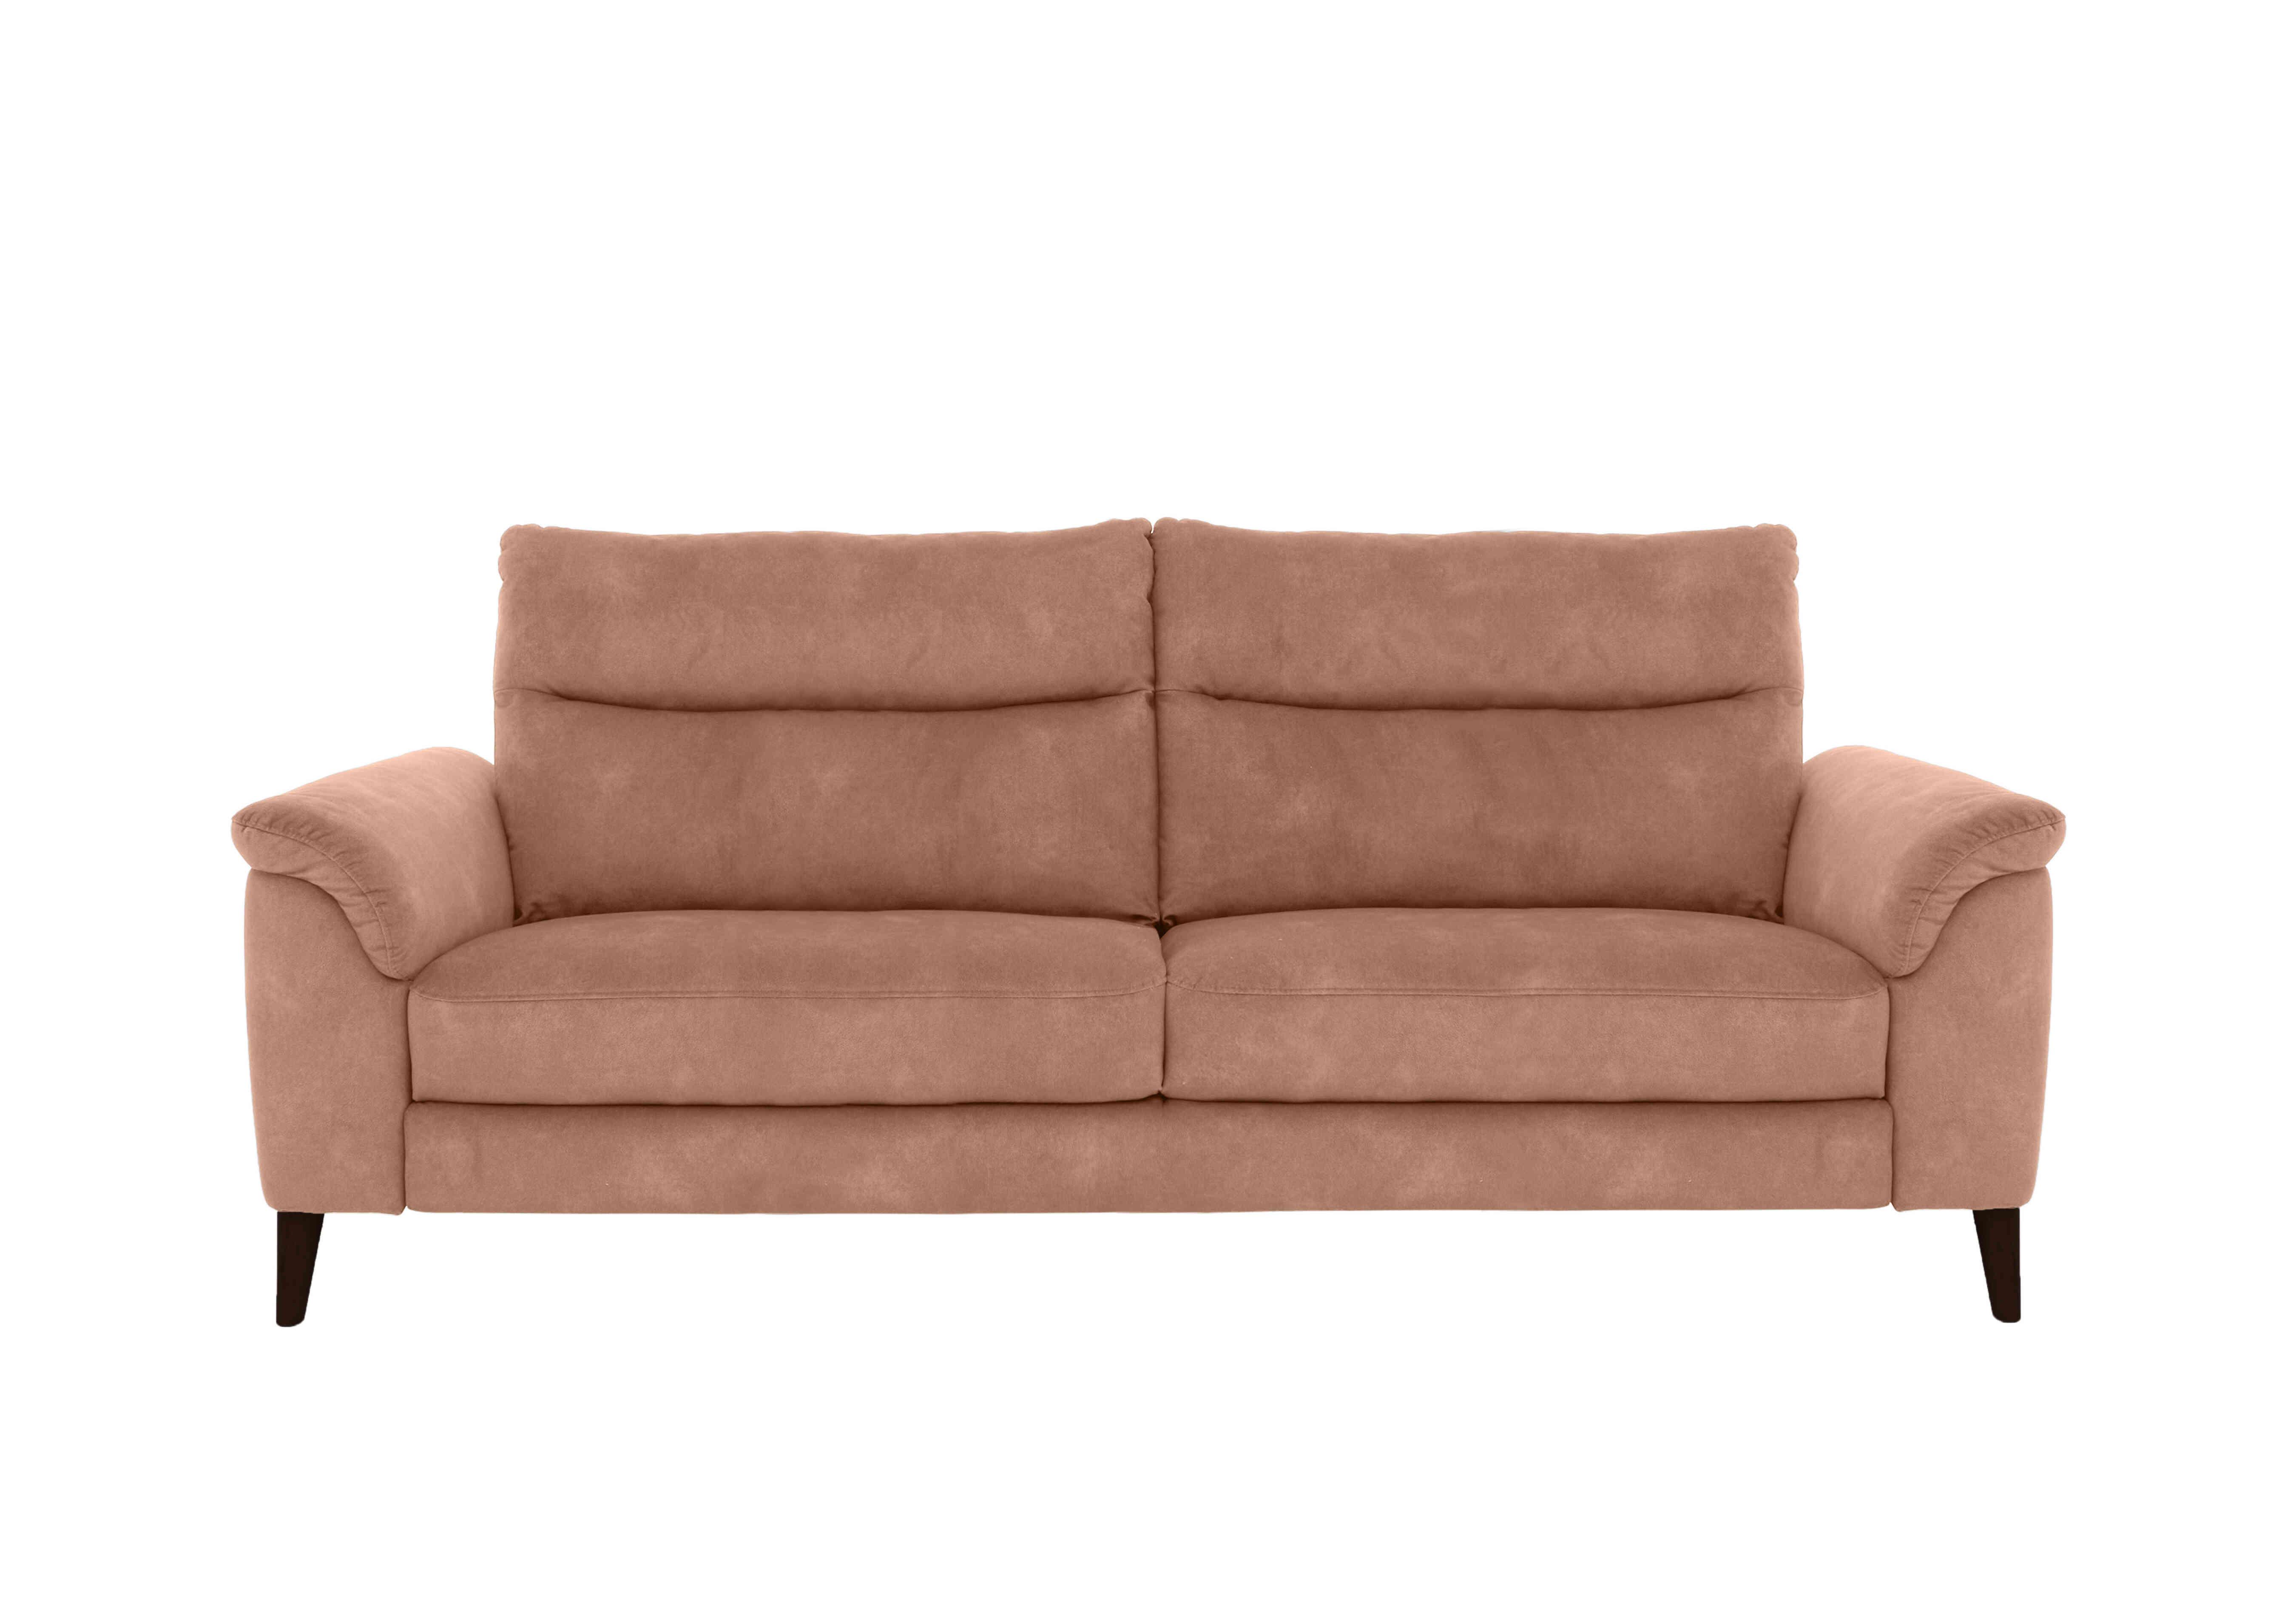 Morgan 3 Seater Fabric Sofa in Sand Dexter 07 43507 on Furniture Village